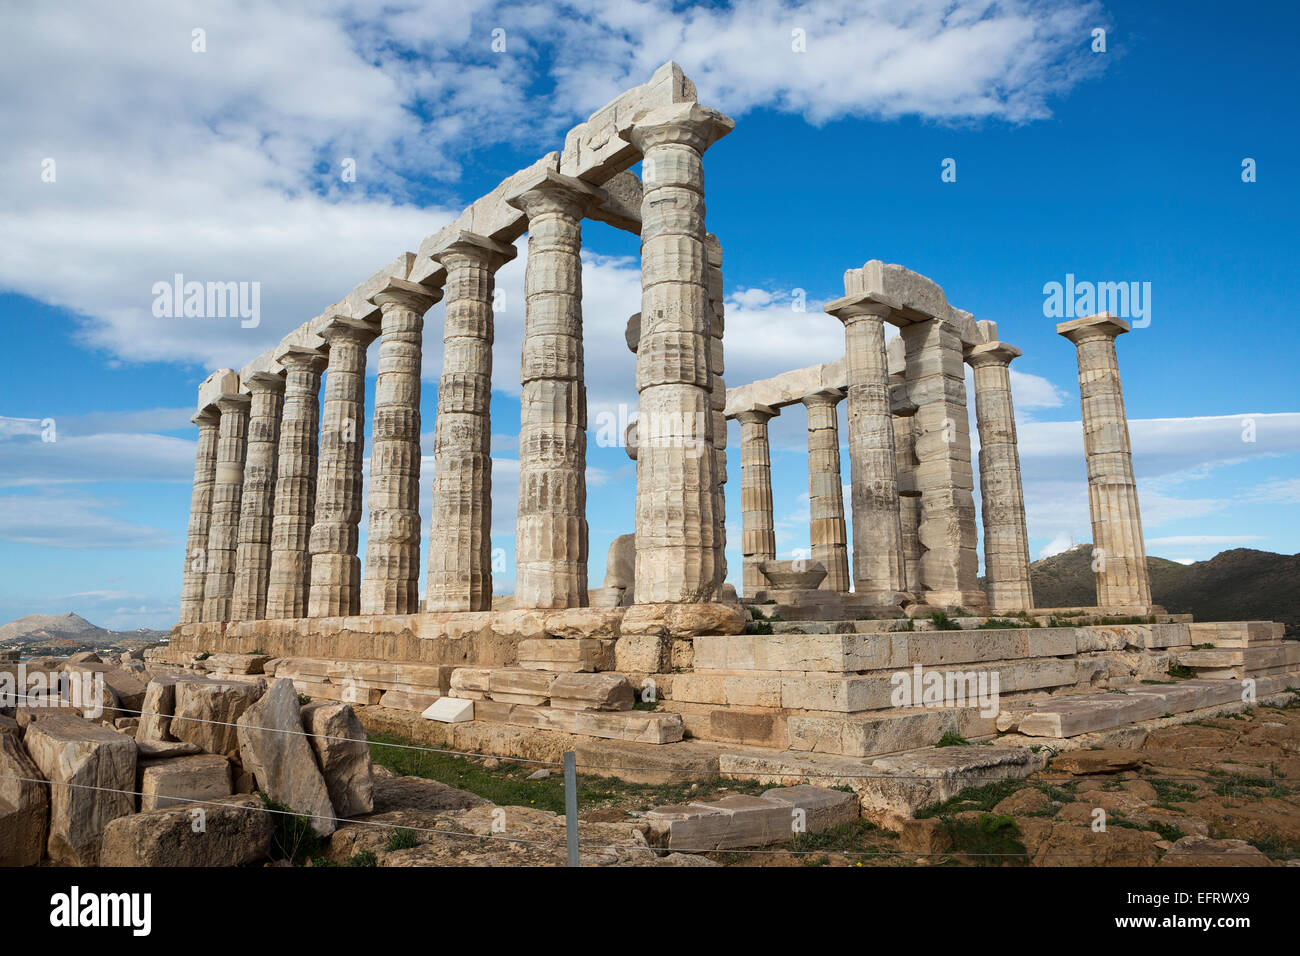 Temple of Poseidon (Greek God of the Sea), mythology, Cape Sounion, Greece Stock Photo